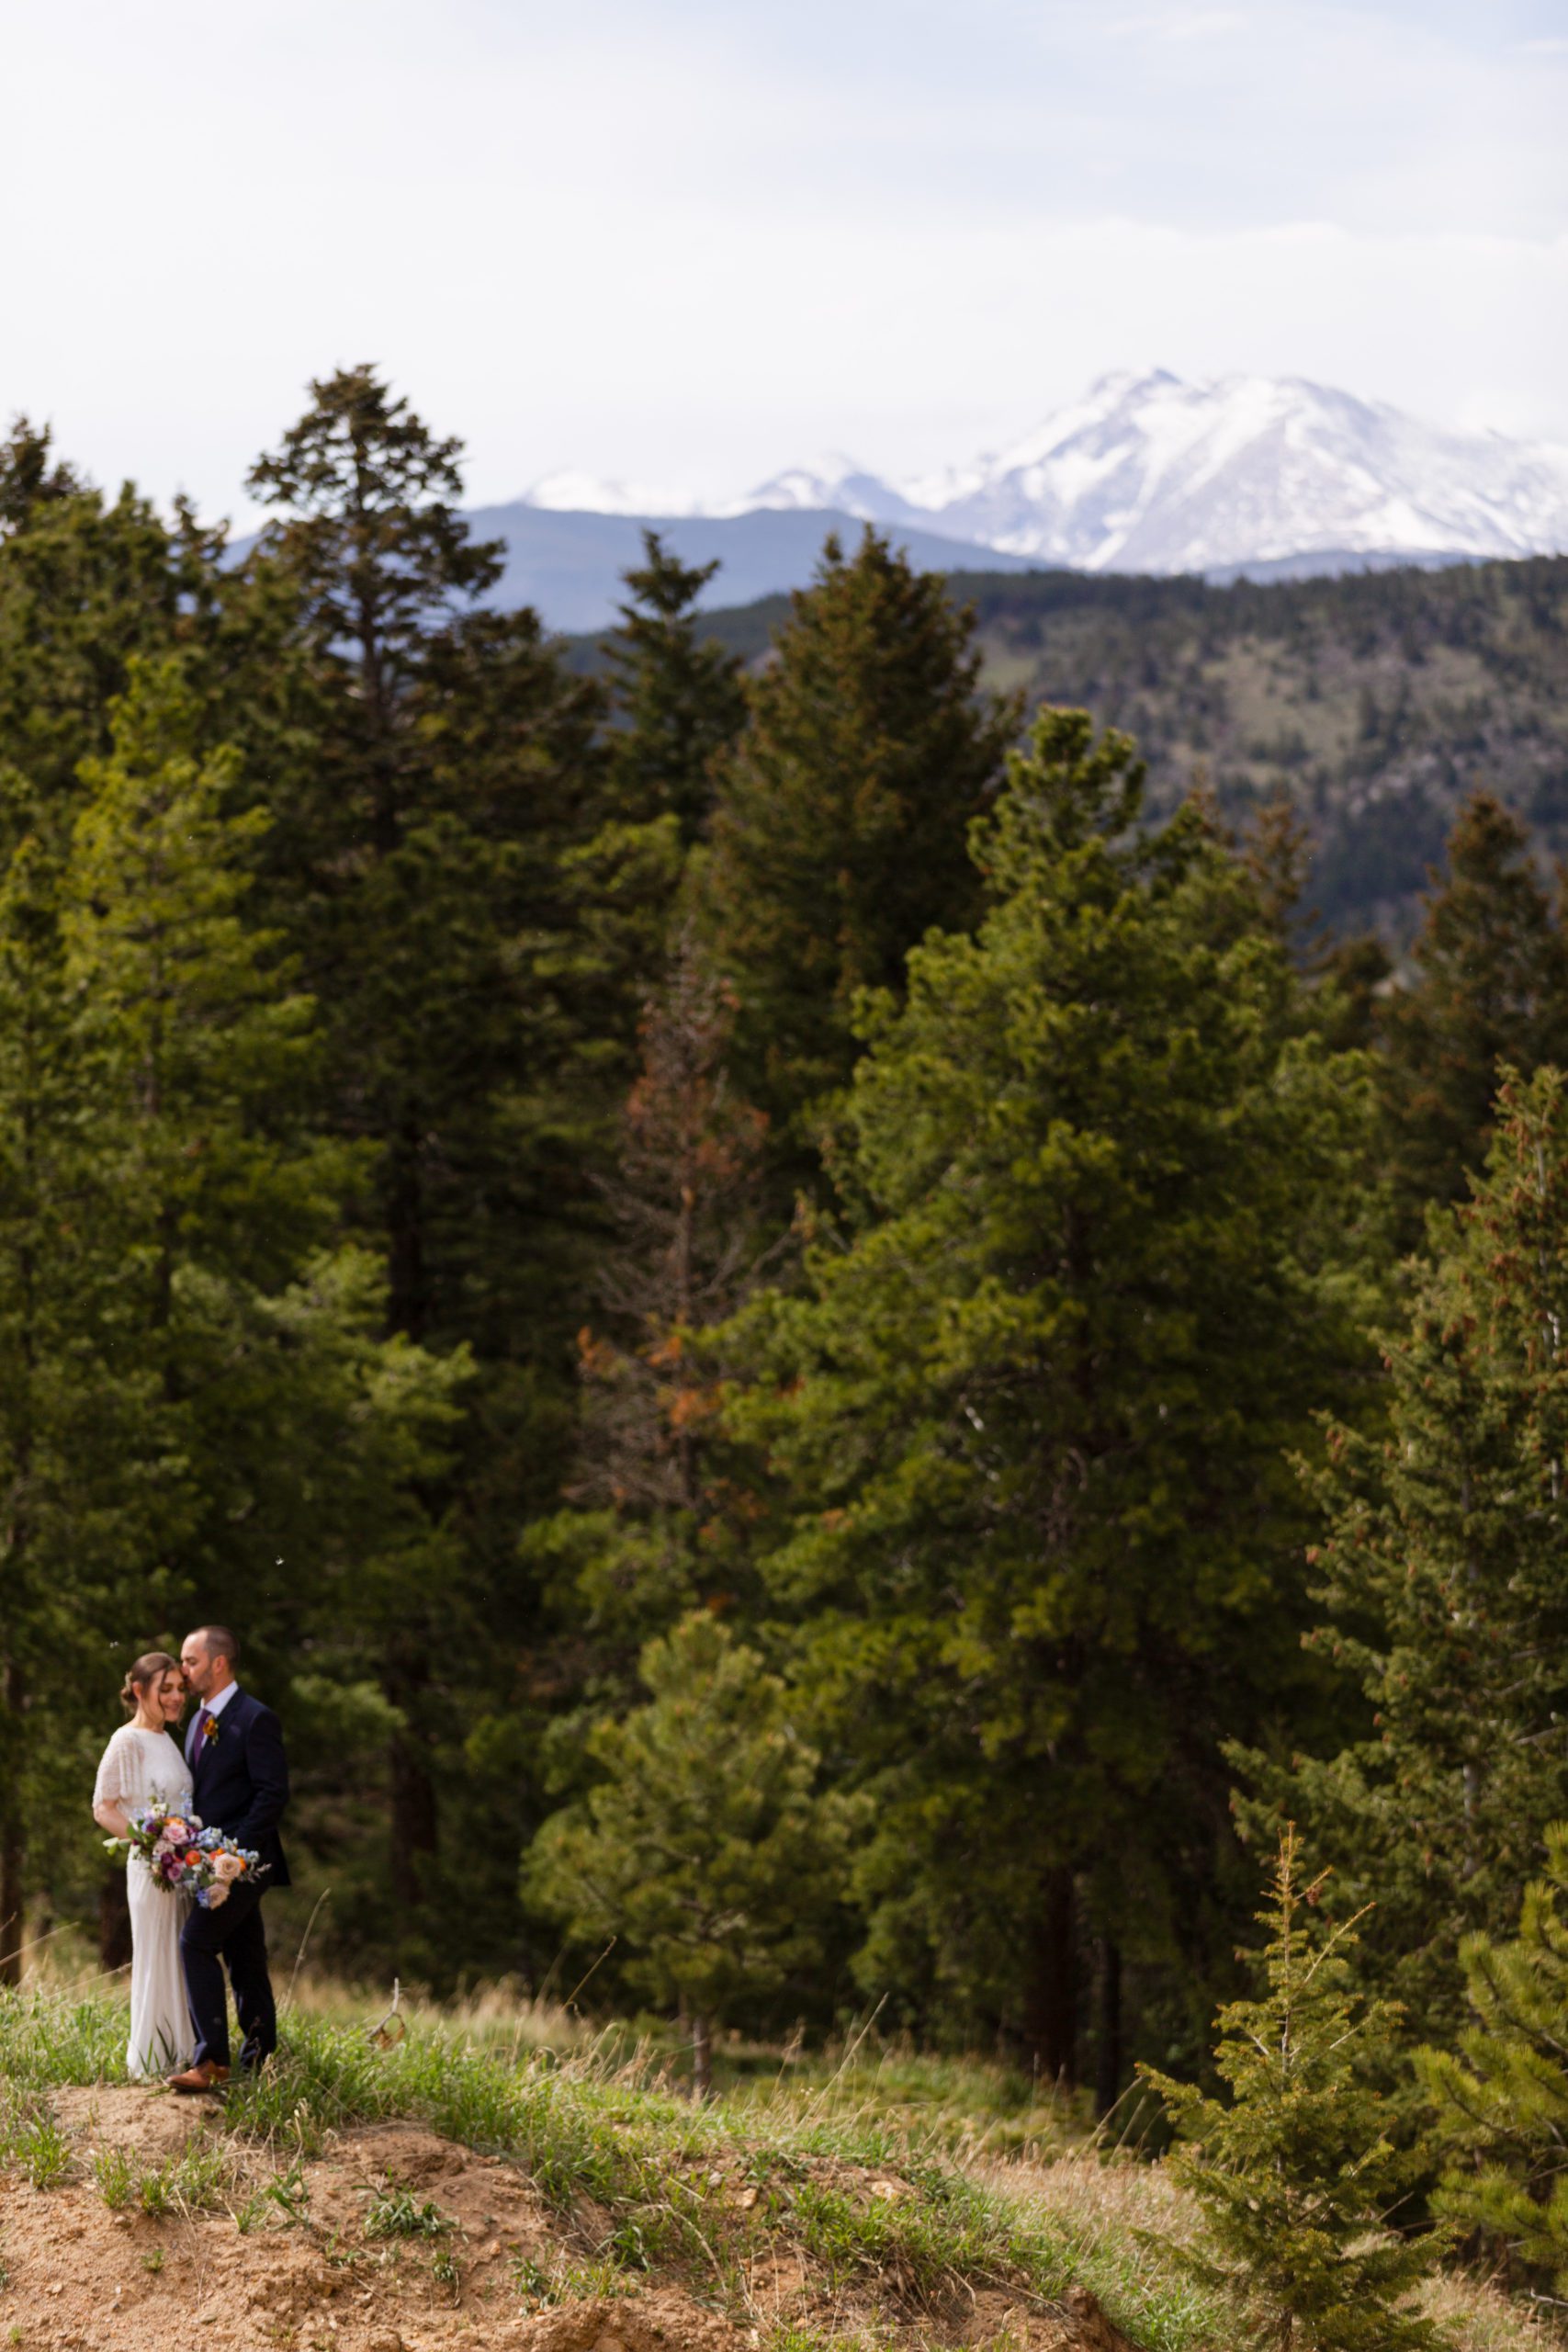 Gold Hill Inn Boulder Colorado Bride and Groom wedding photos, BHLDN, A Florae